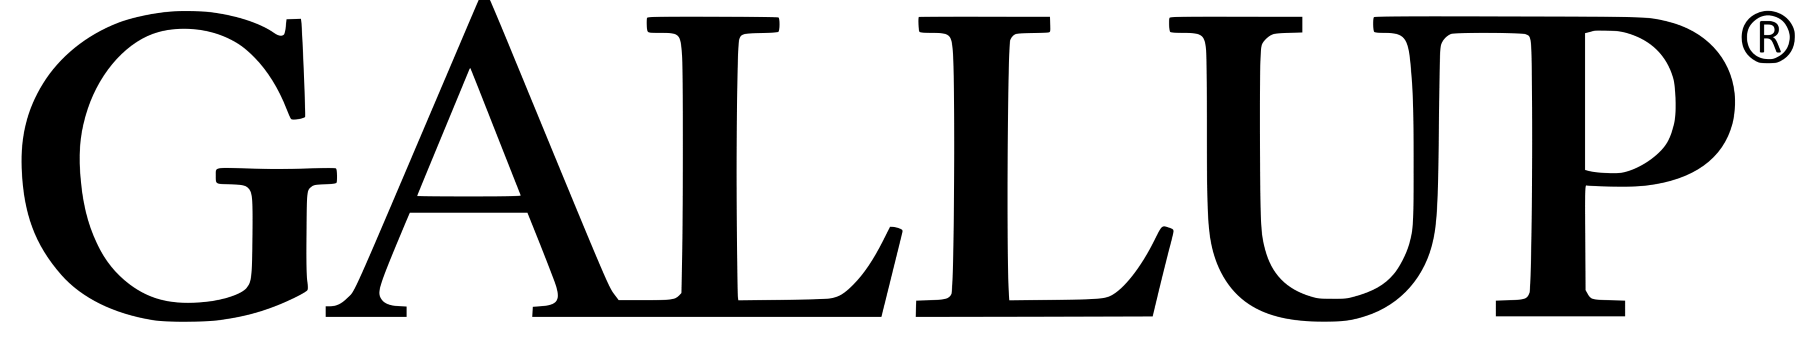 Gallup logo, logotype